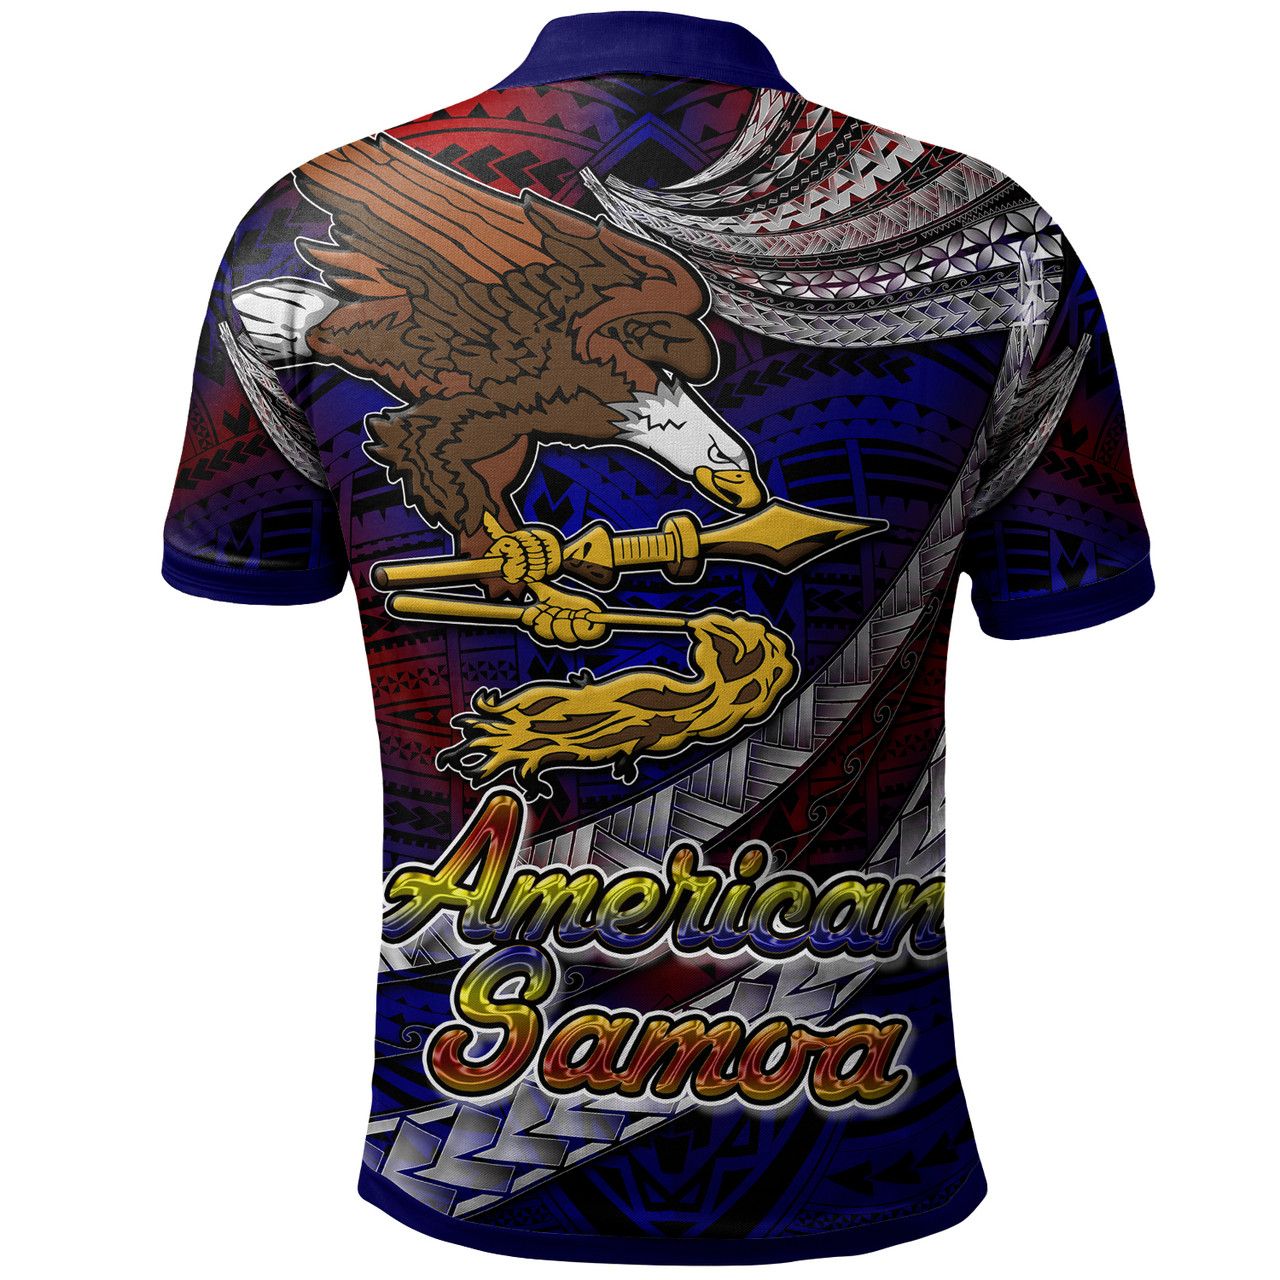 American Samoa Polo Shirt - Custom American Samoa Eagle With Polynesian Patterns Polo Shirt